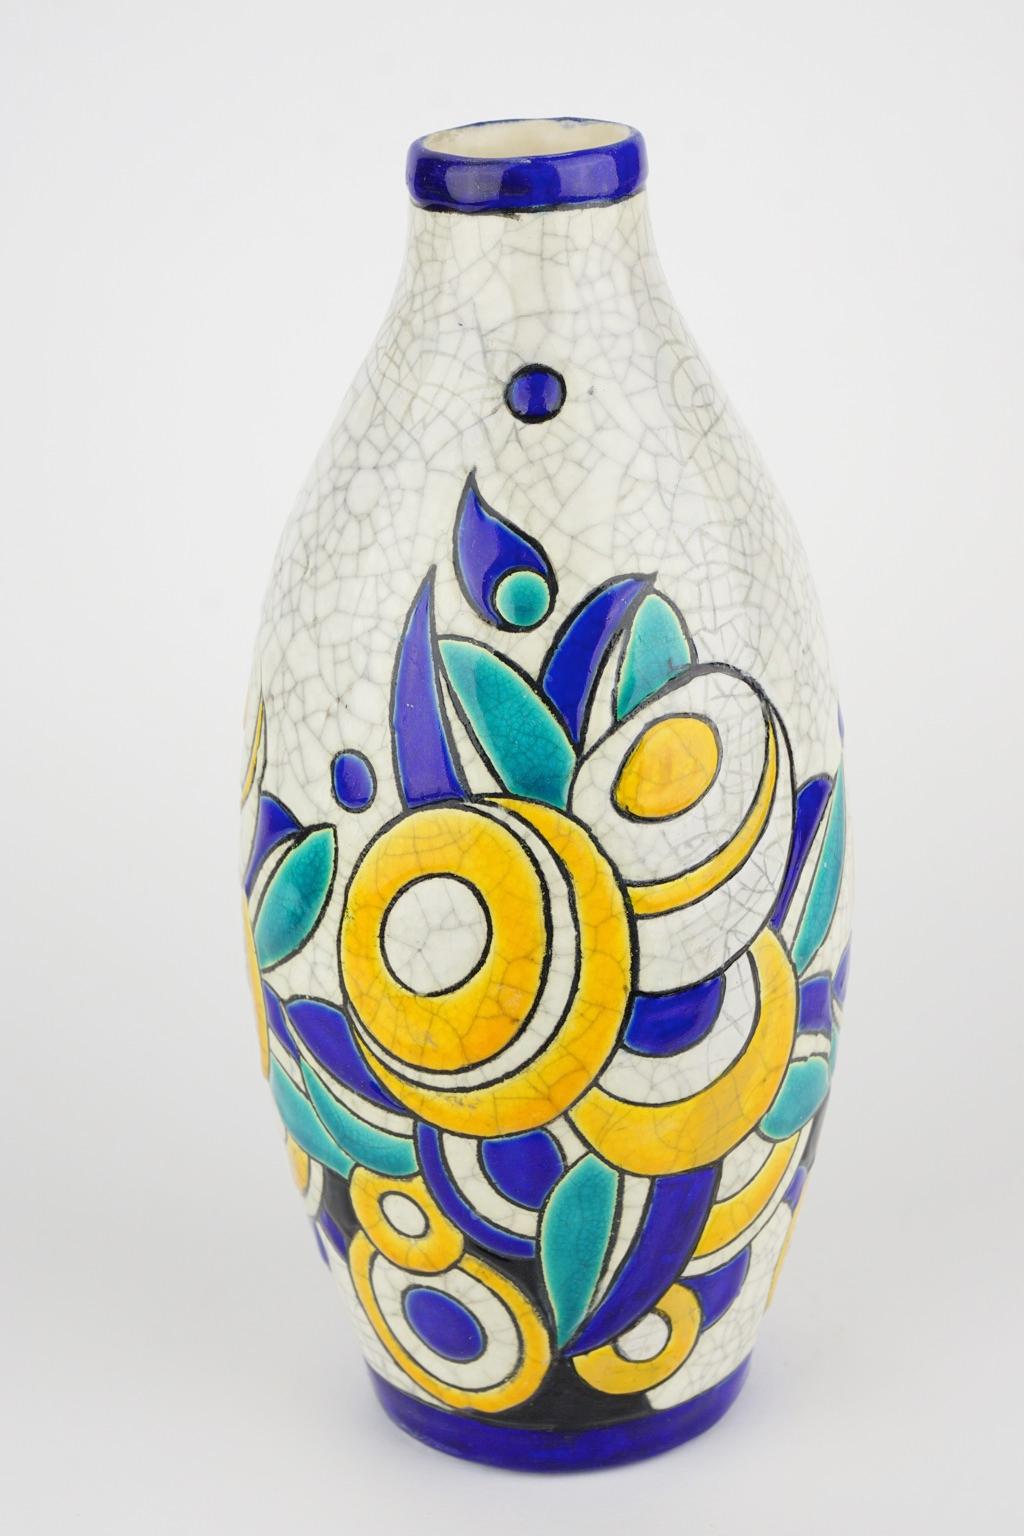 Art Deco Keramis Boch crackled enameled earthenware vase with geometric flower pattern. Marks D1175 and F897. 

Size: Height 27 cm, top diameter 4.4 cm, bottom diameter 7.5 cm.